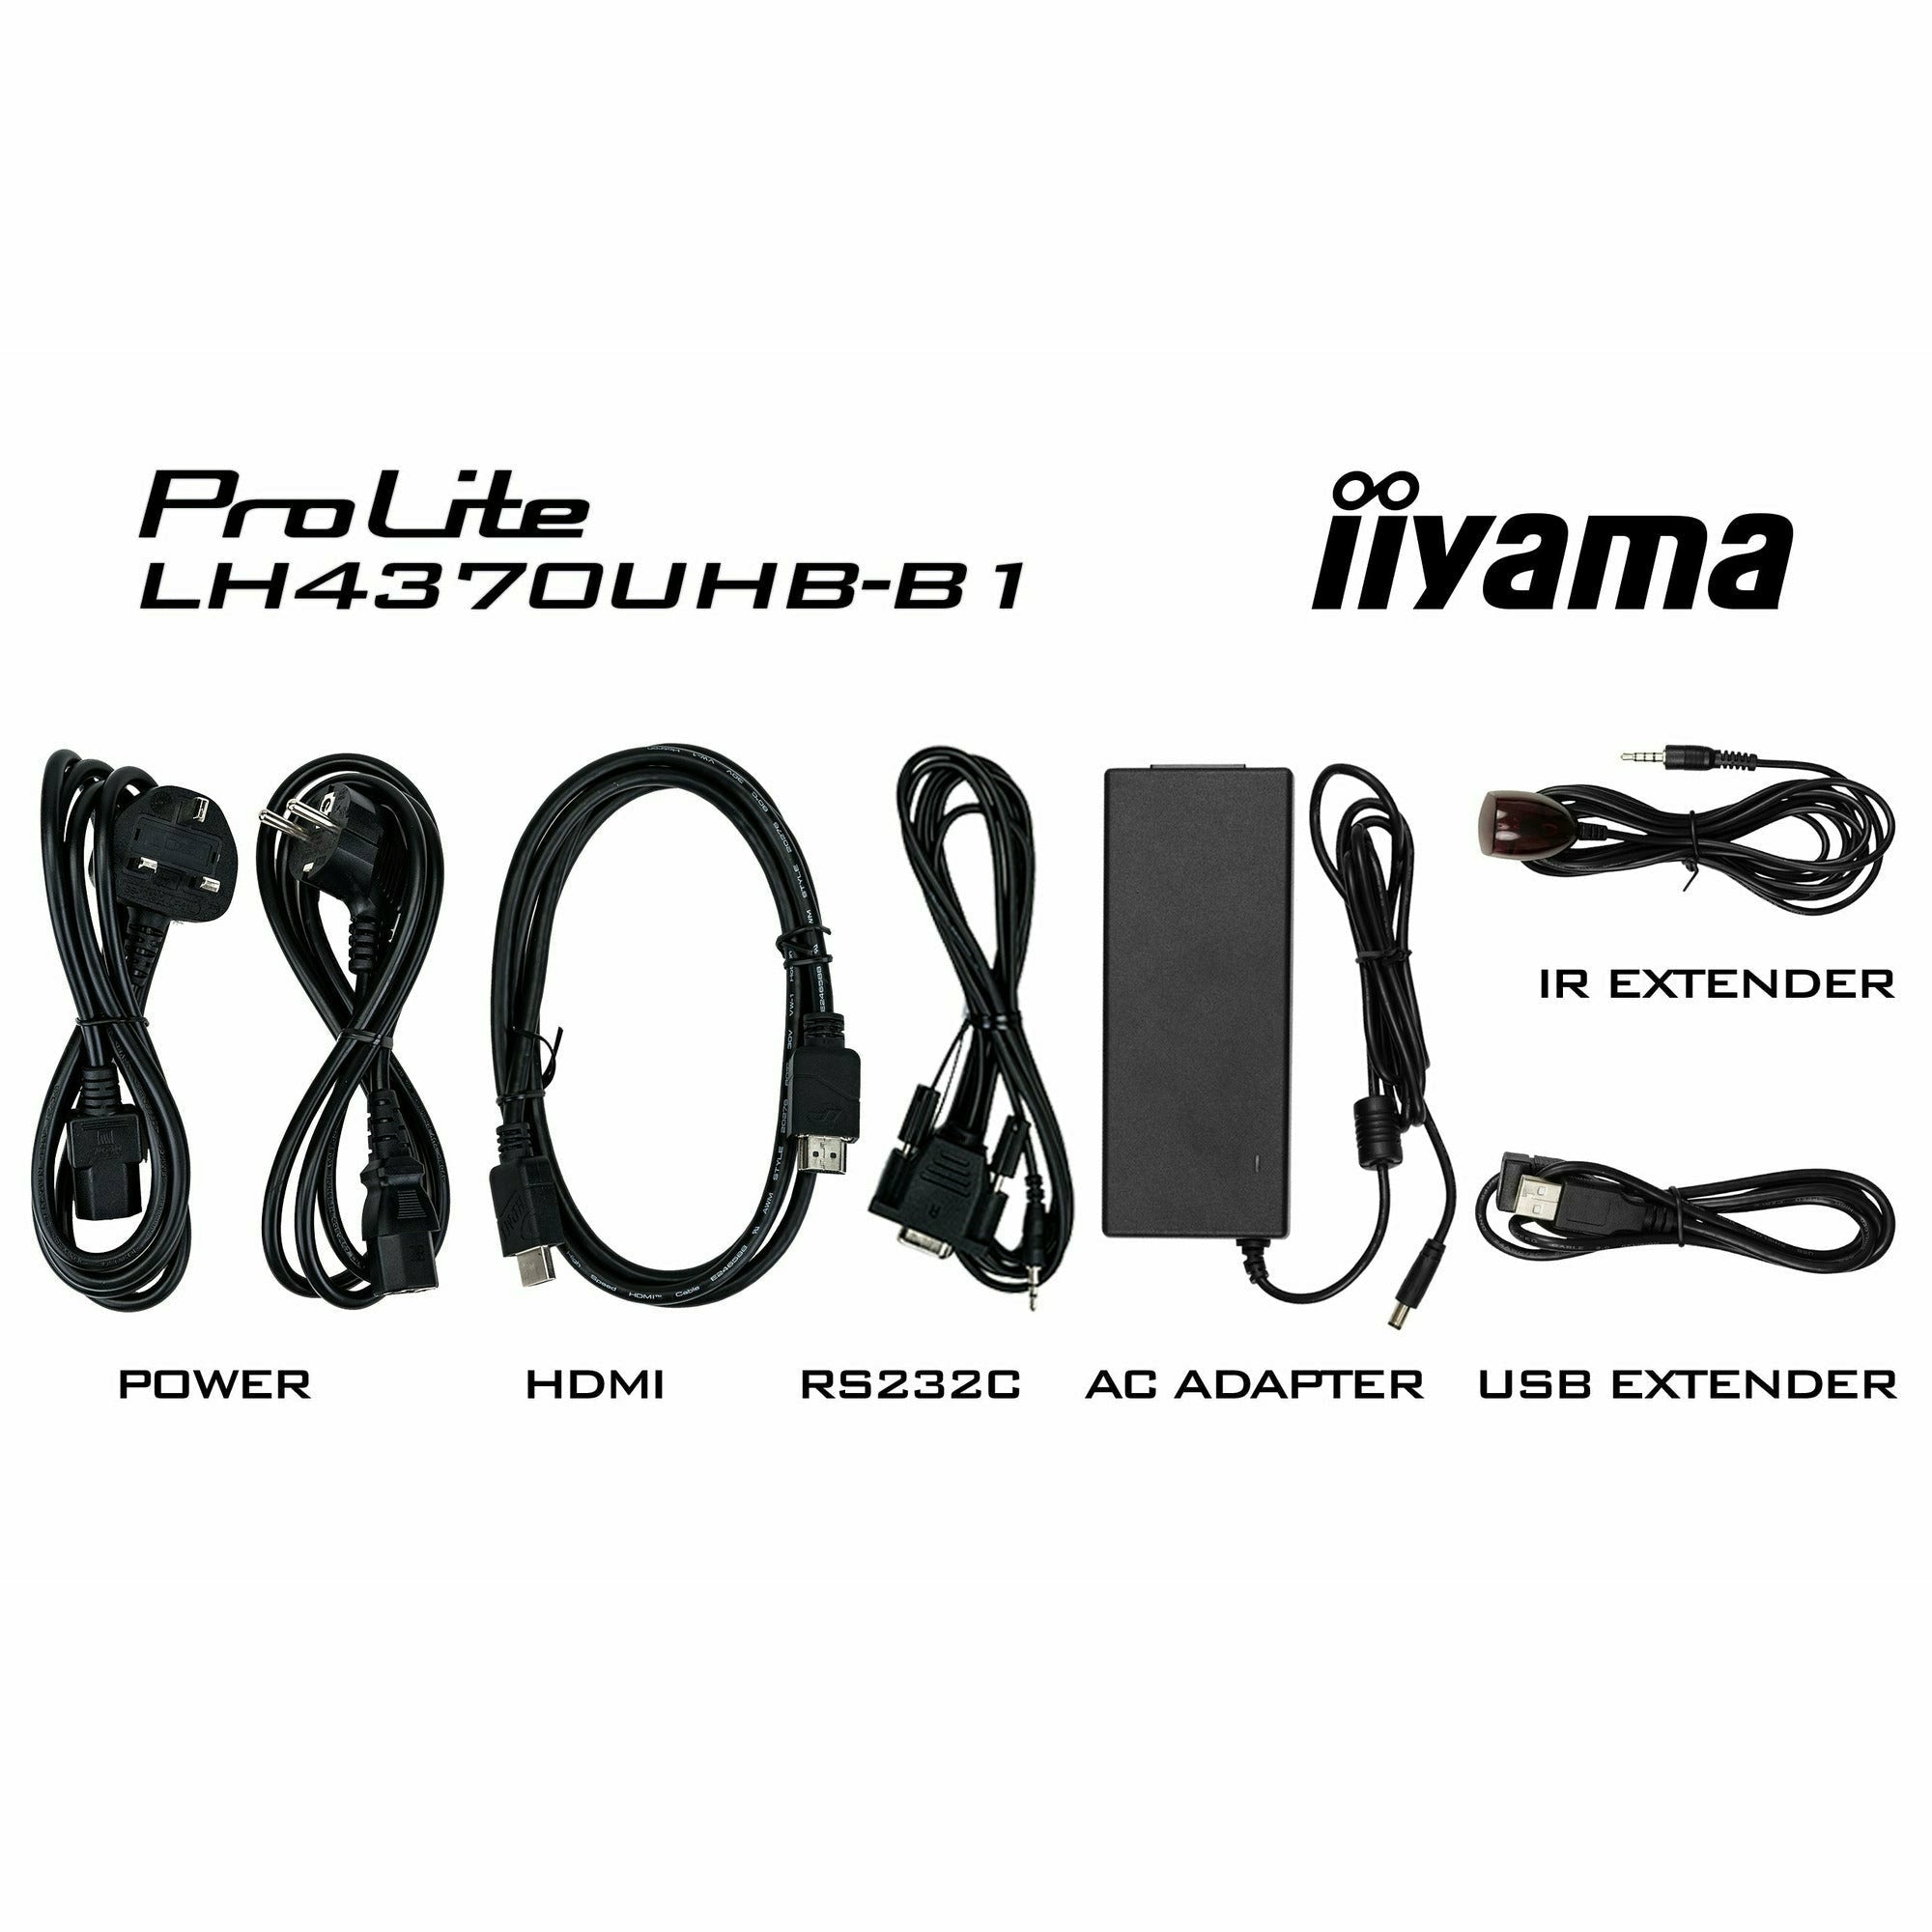 iiyama ProLite LH4370UHB-B1 43” Large Format Display with 24/7, 4K UHD, Android 9.0 and 700cd/m² High Brightness